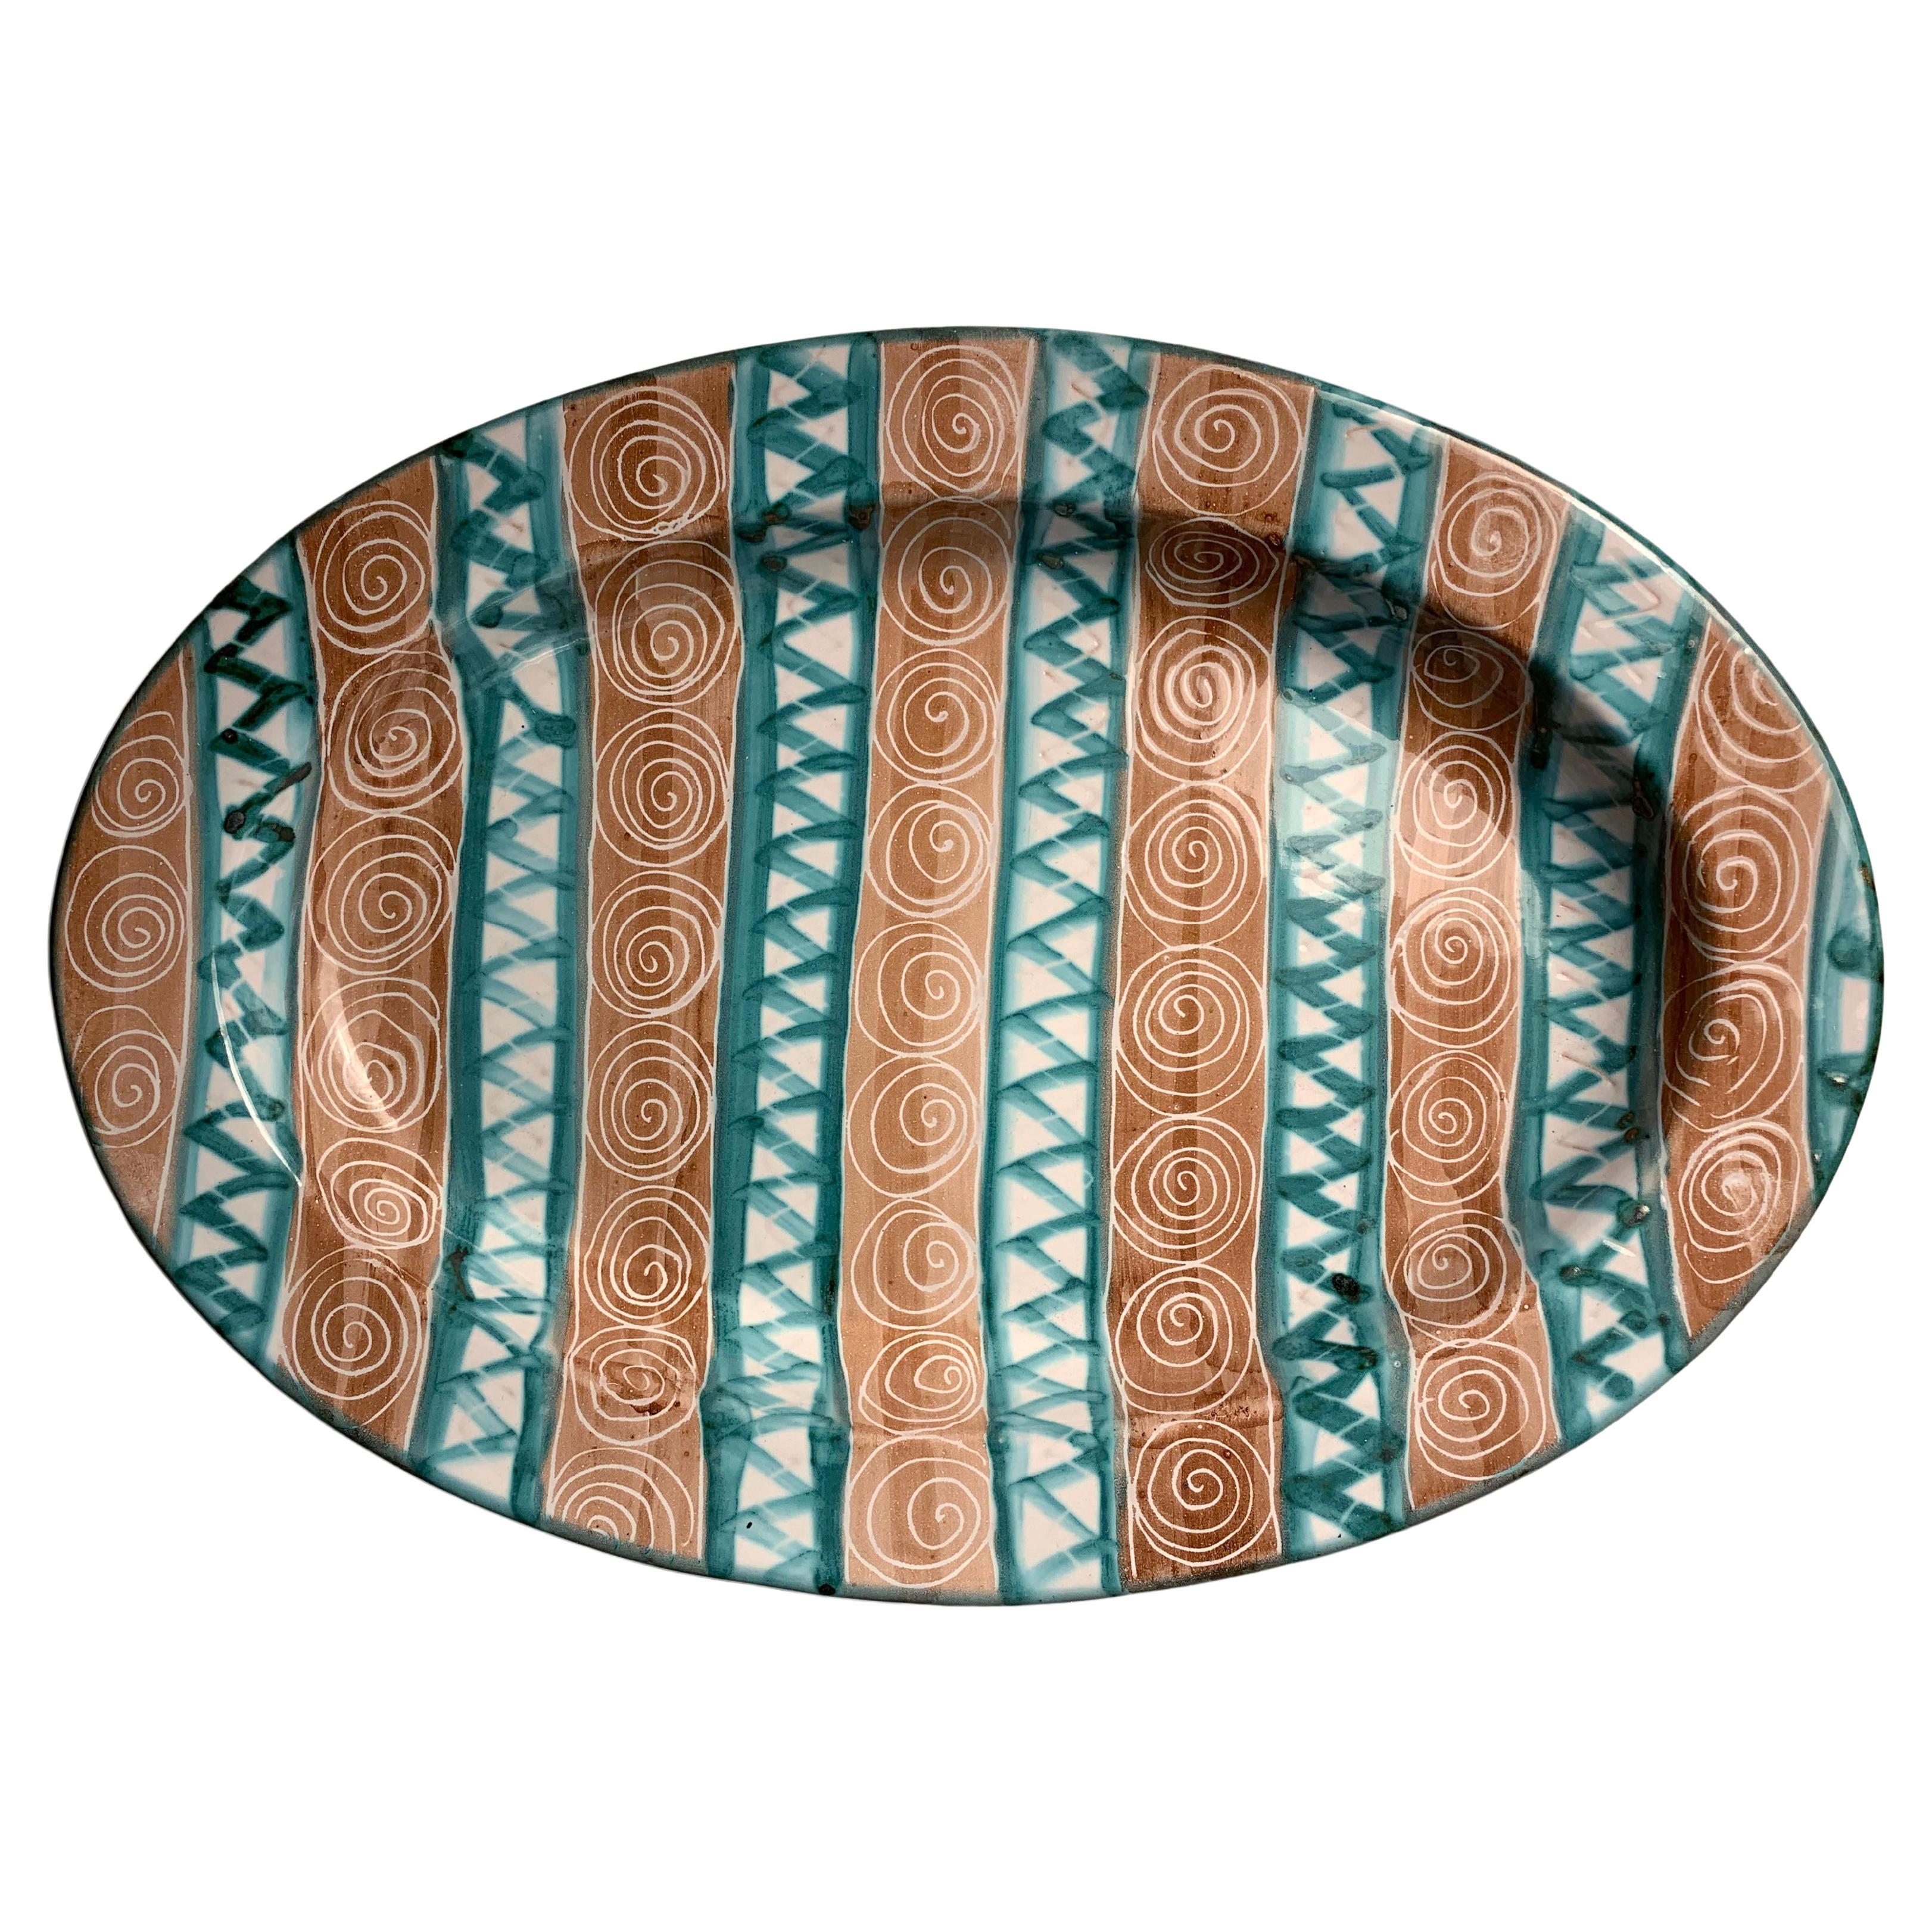 Robert Picault - Grand plat décoratif ovale